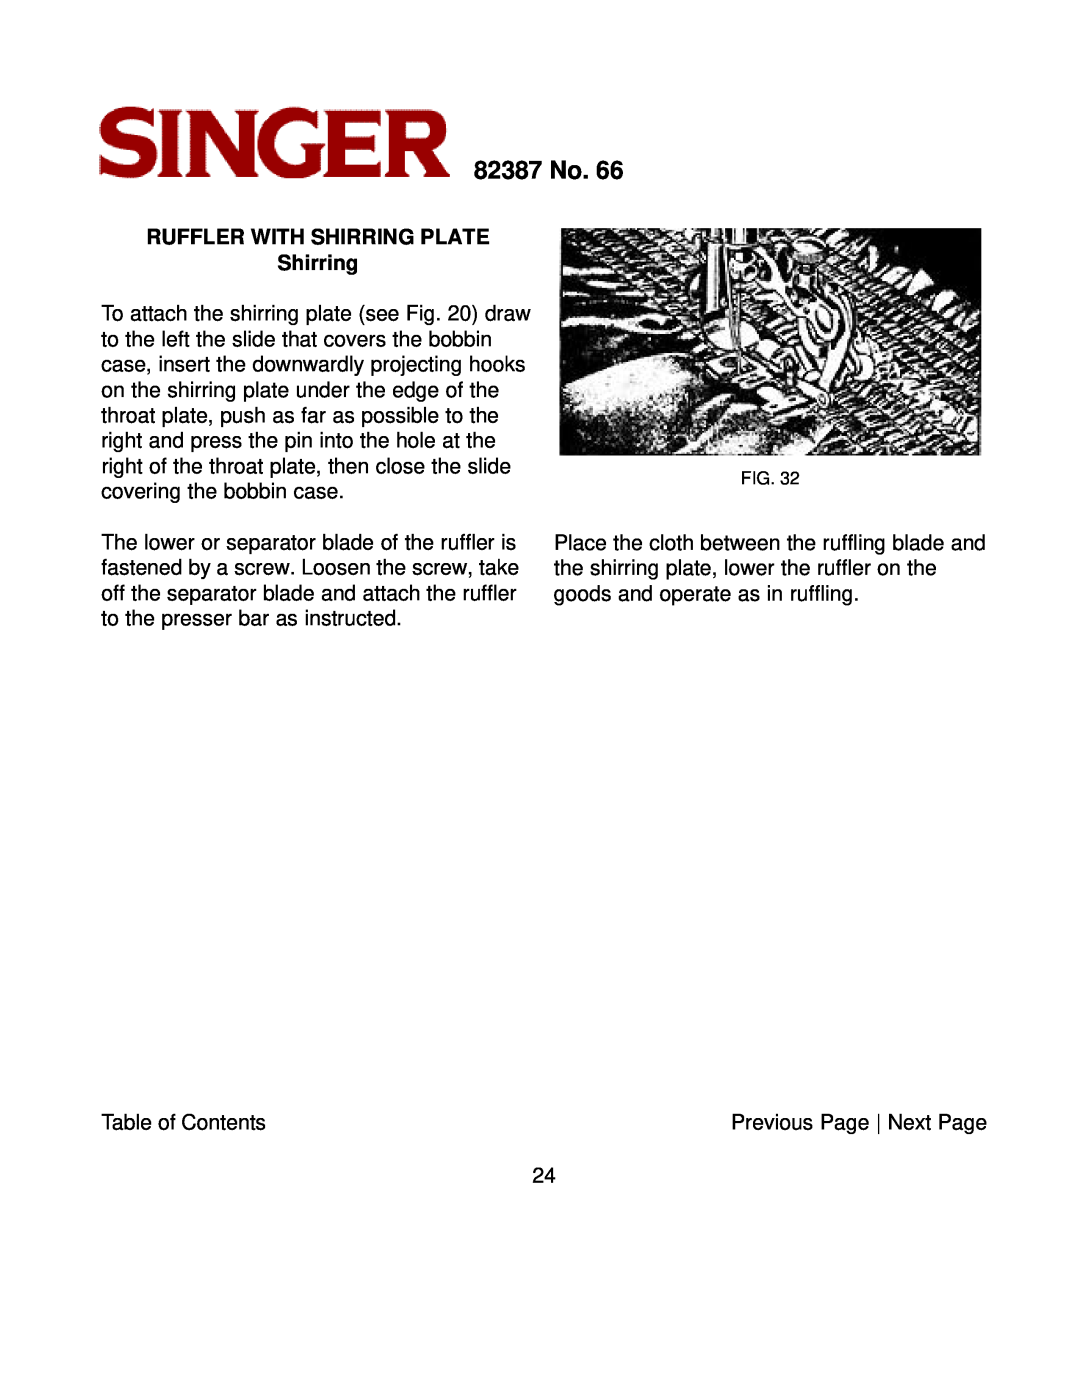 Singer instruction manual RUFFLER WITH SHIRRING PLATE Shirring, 82387 No 